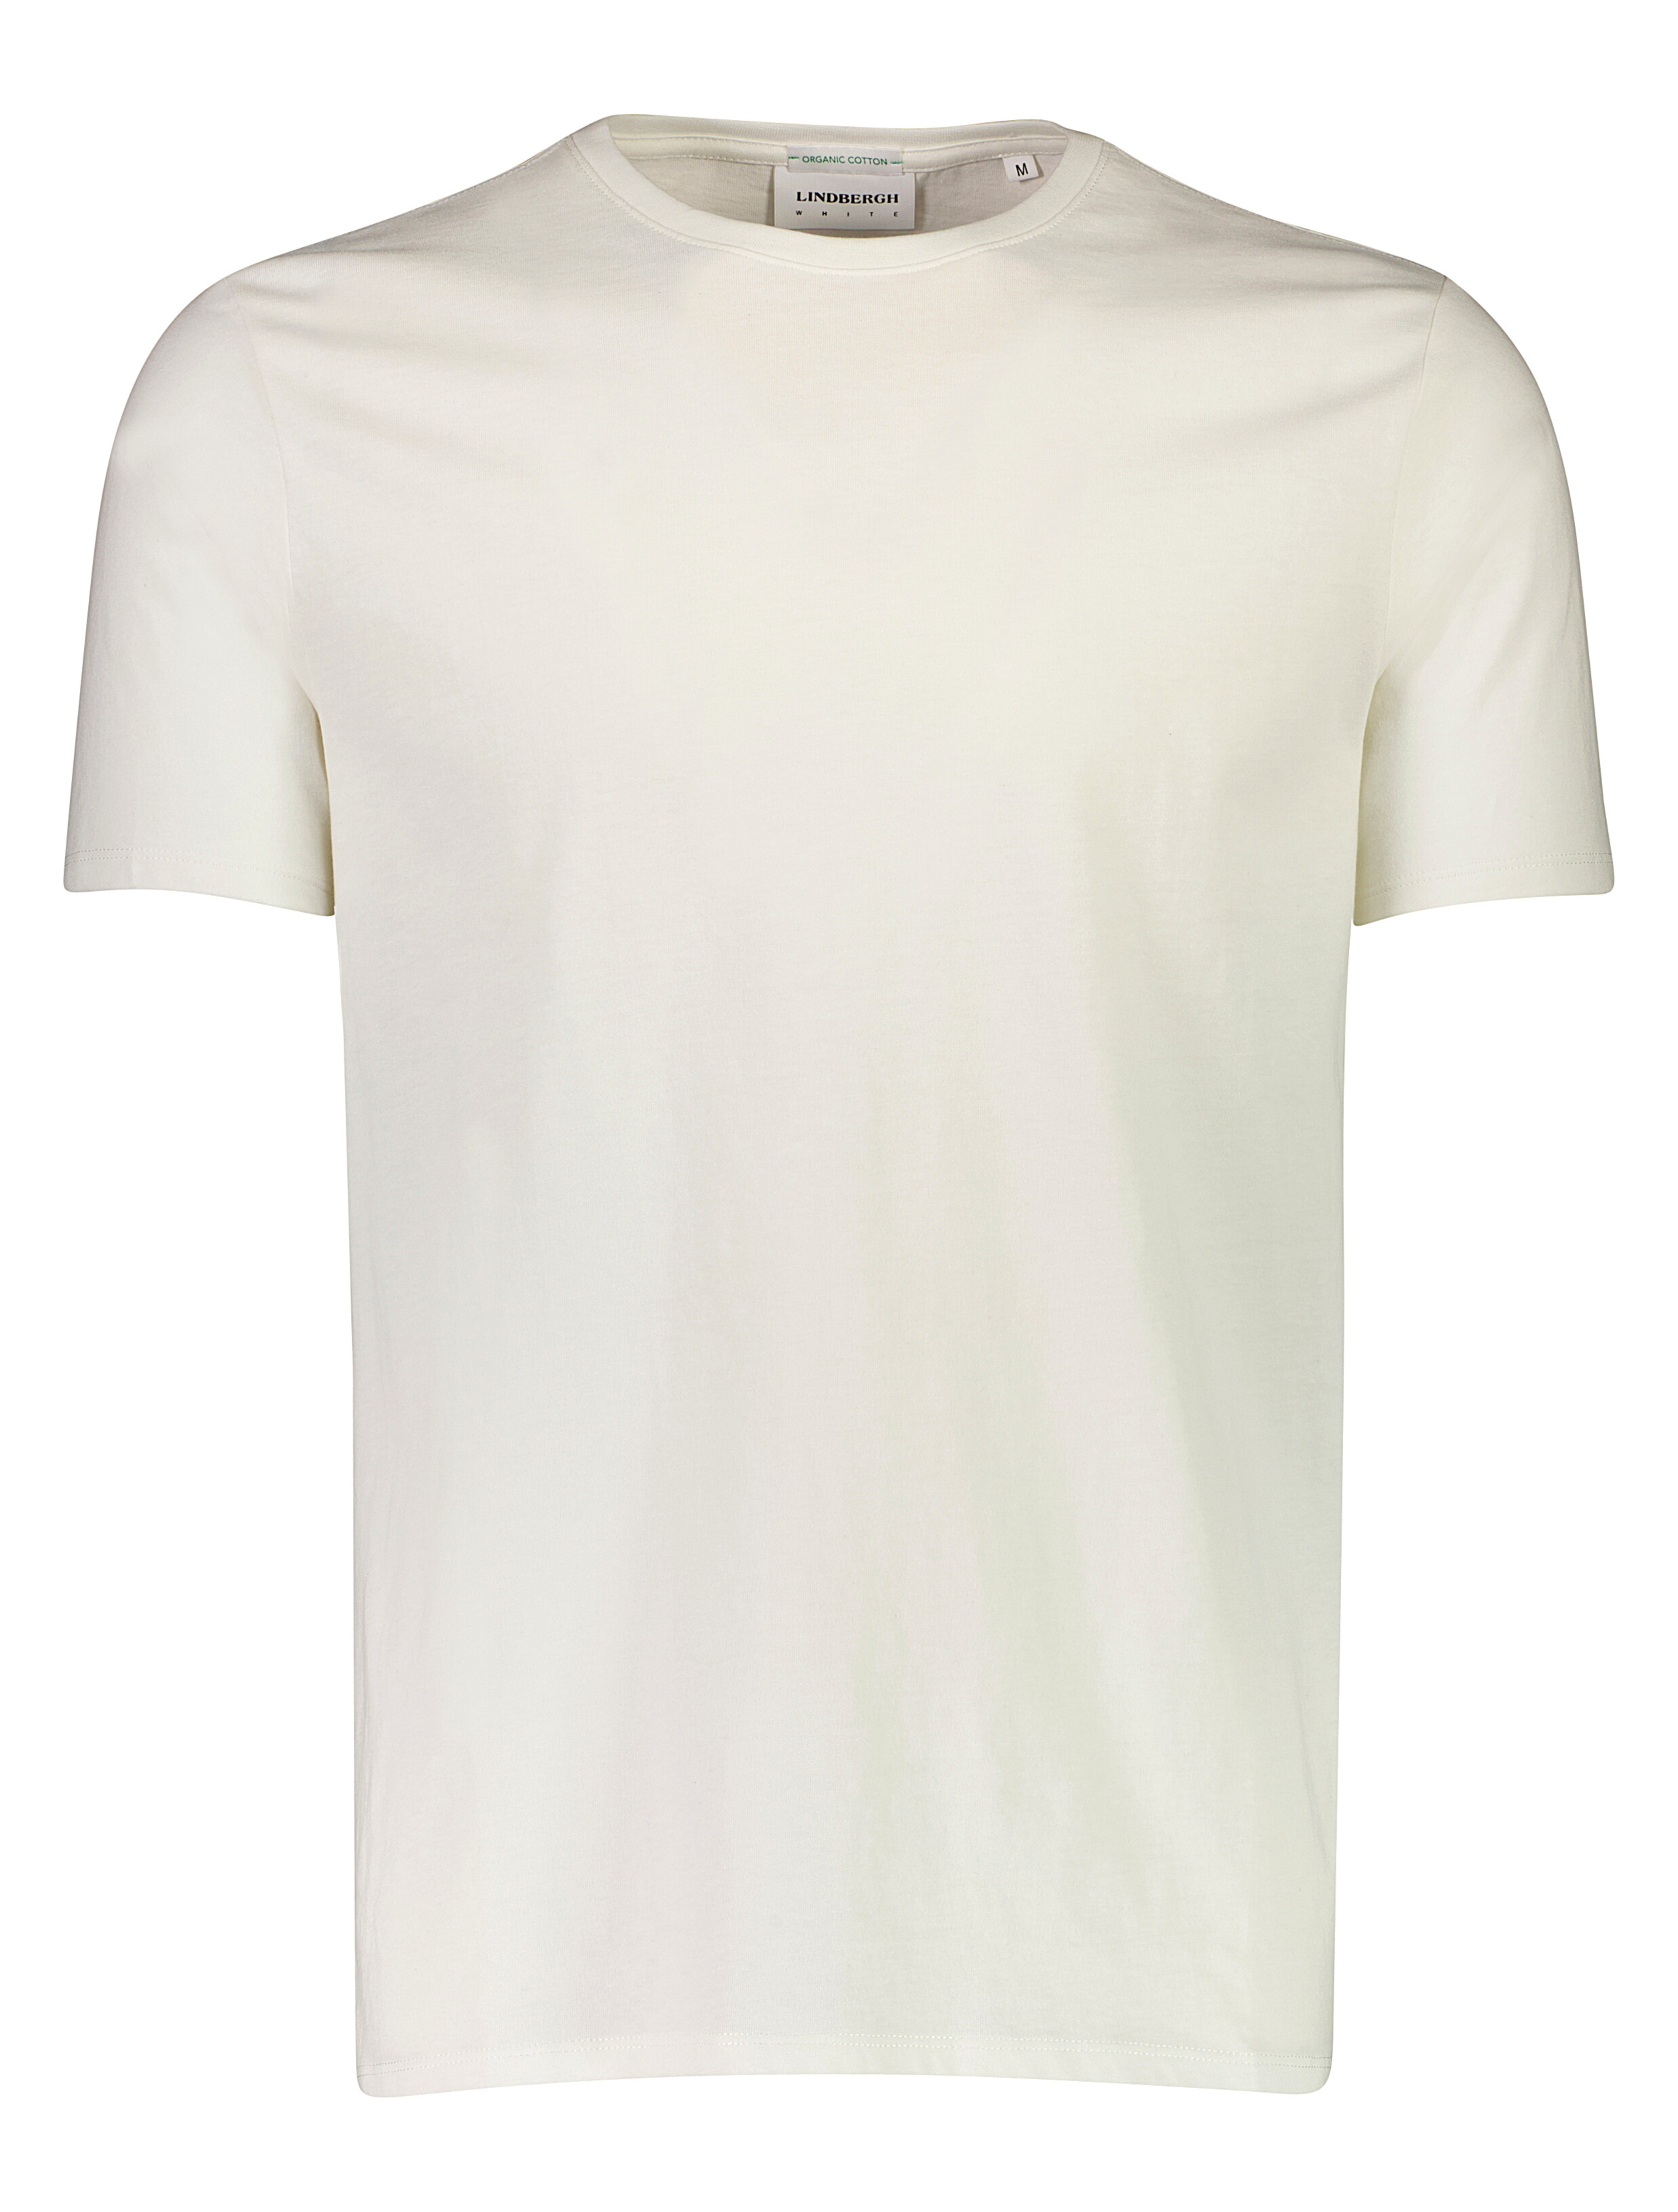 Lindbergh T-Shirt weiss / off white